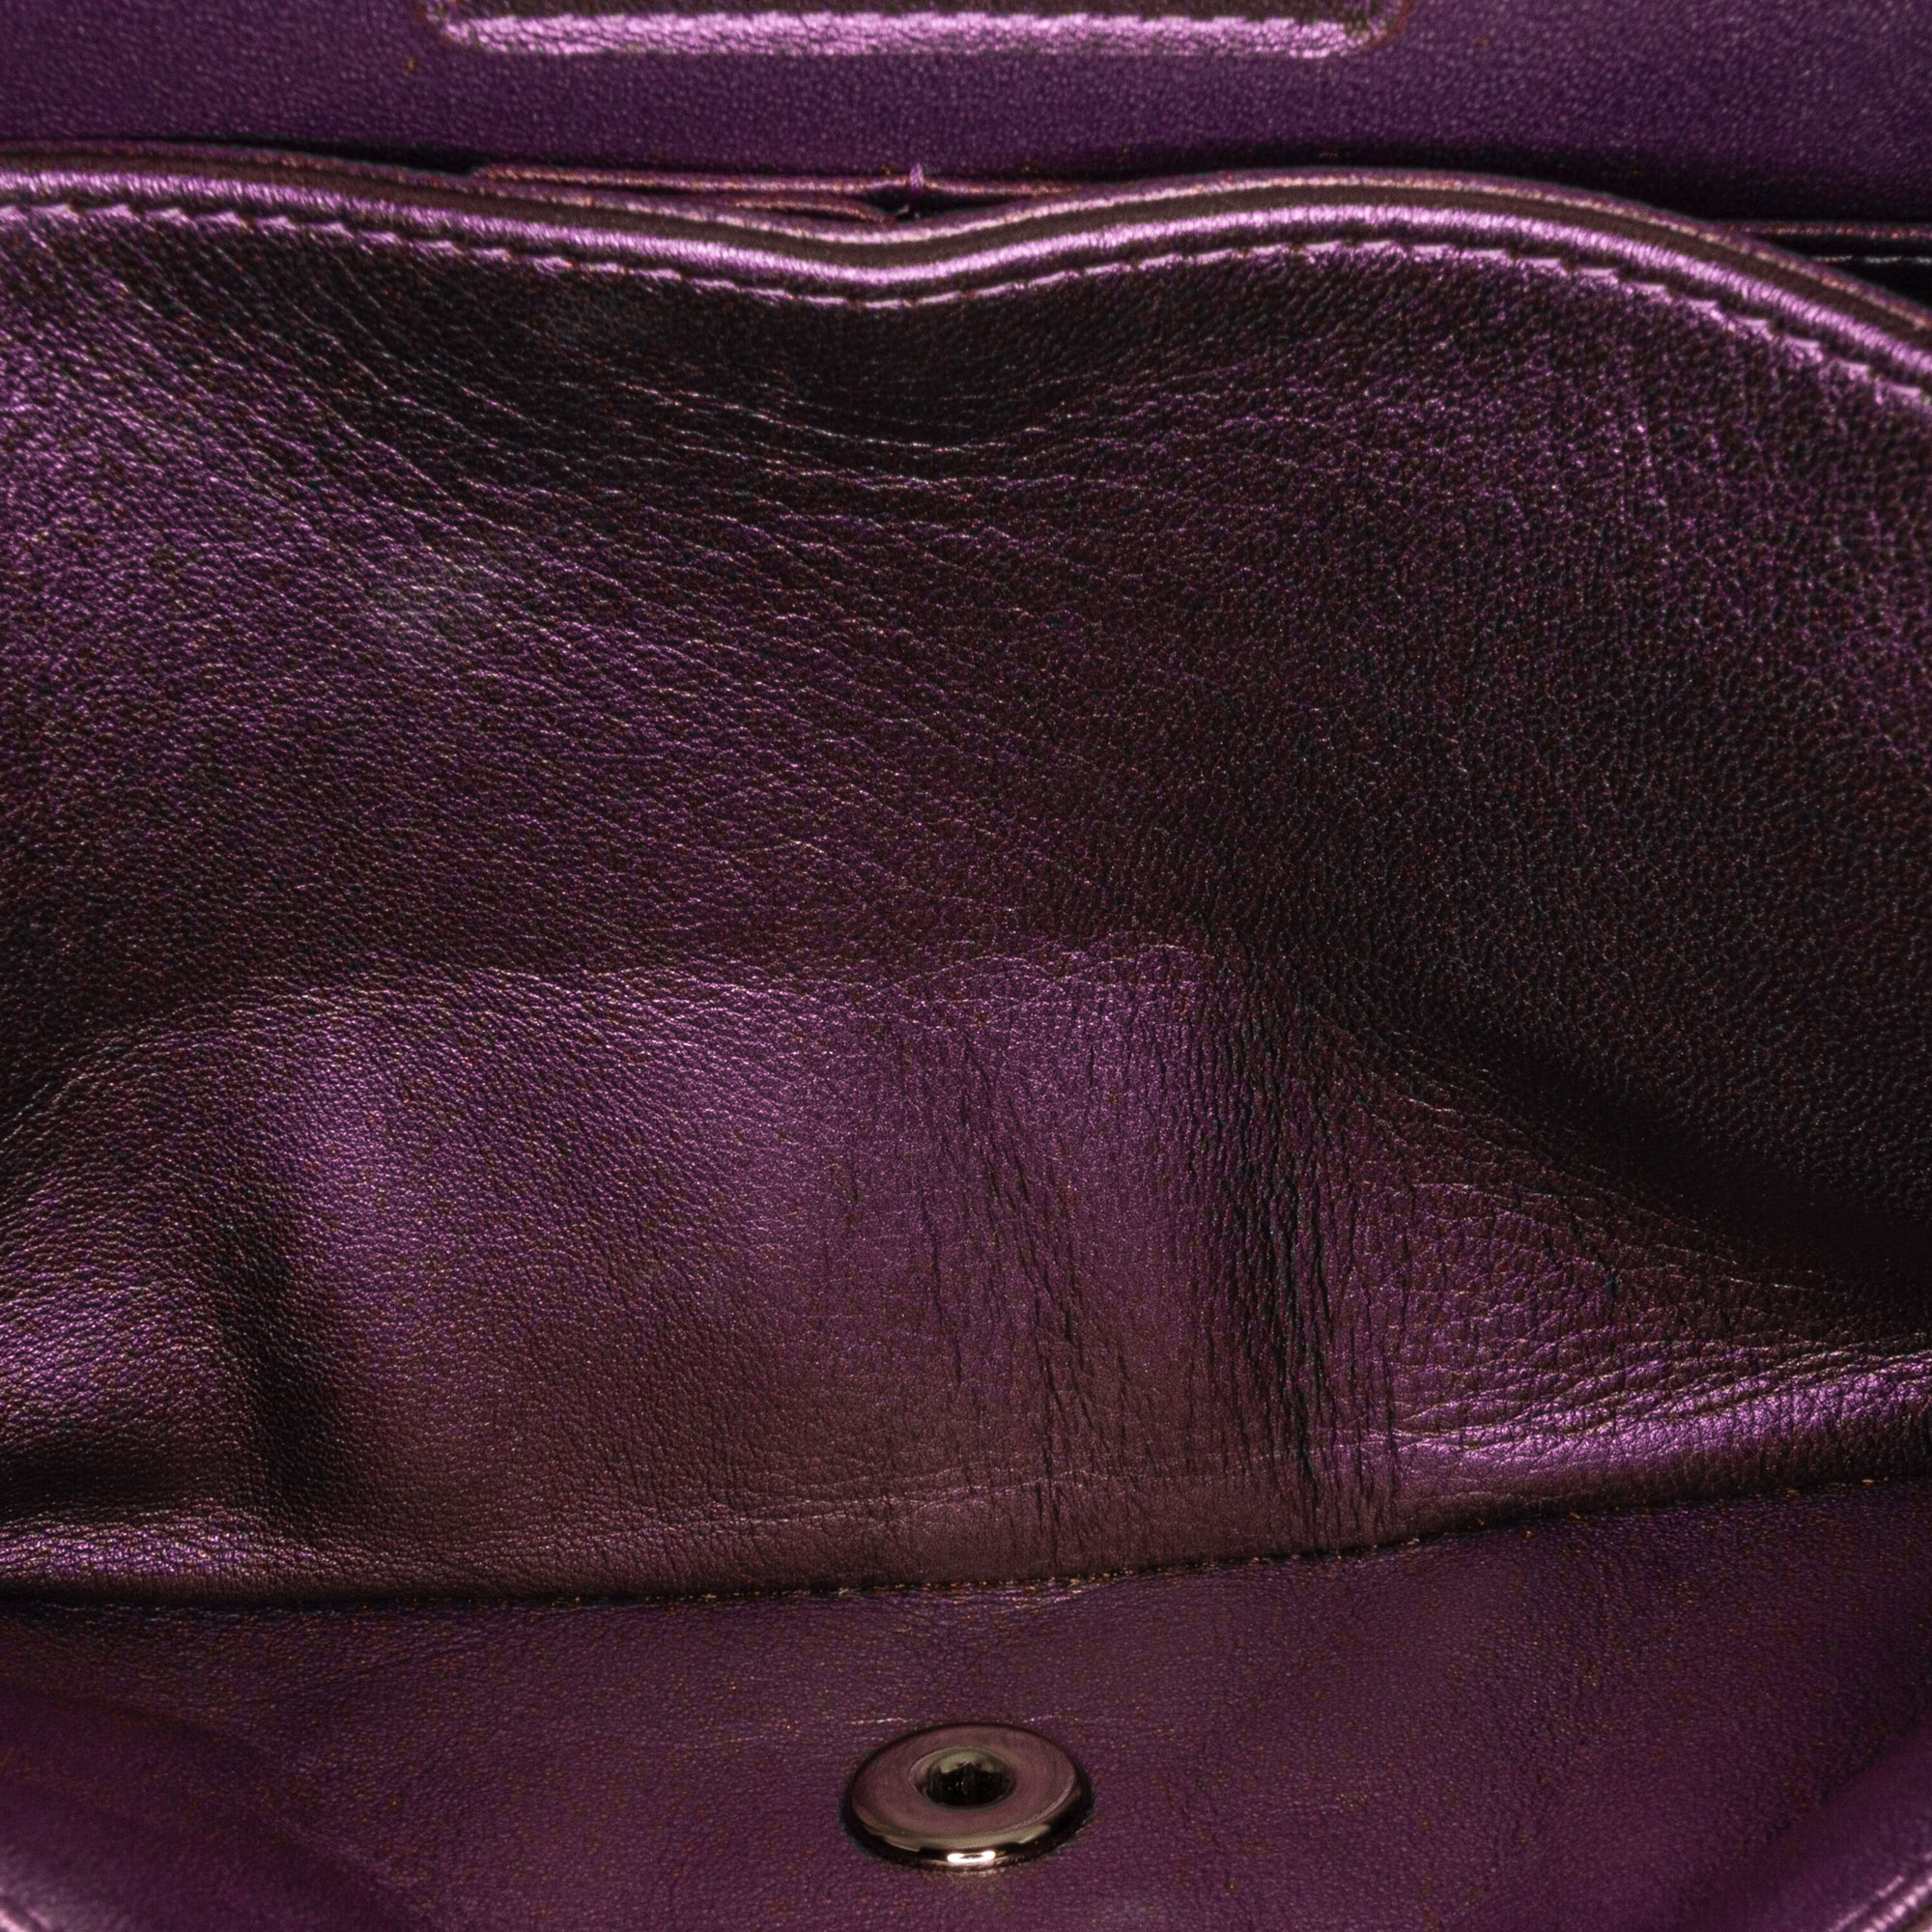 Chanel Purple Medium Classic Iridescent Lambskin Double Flap